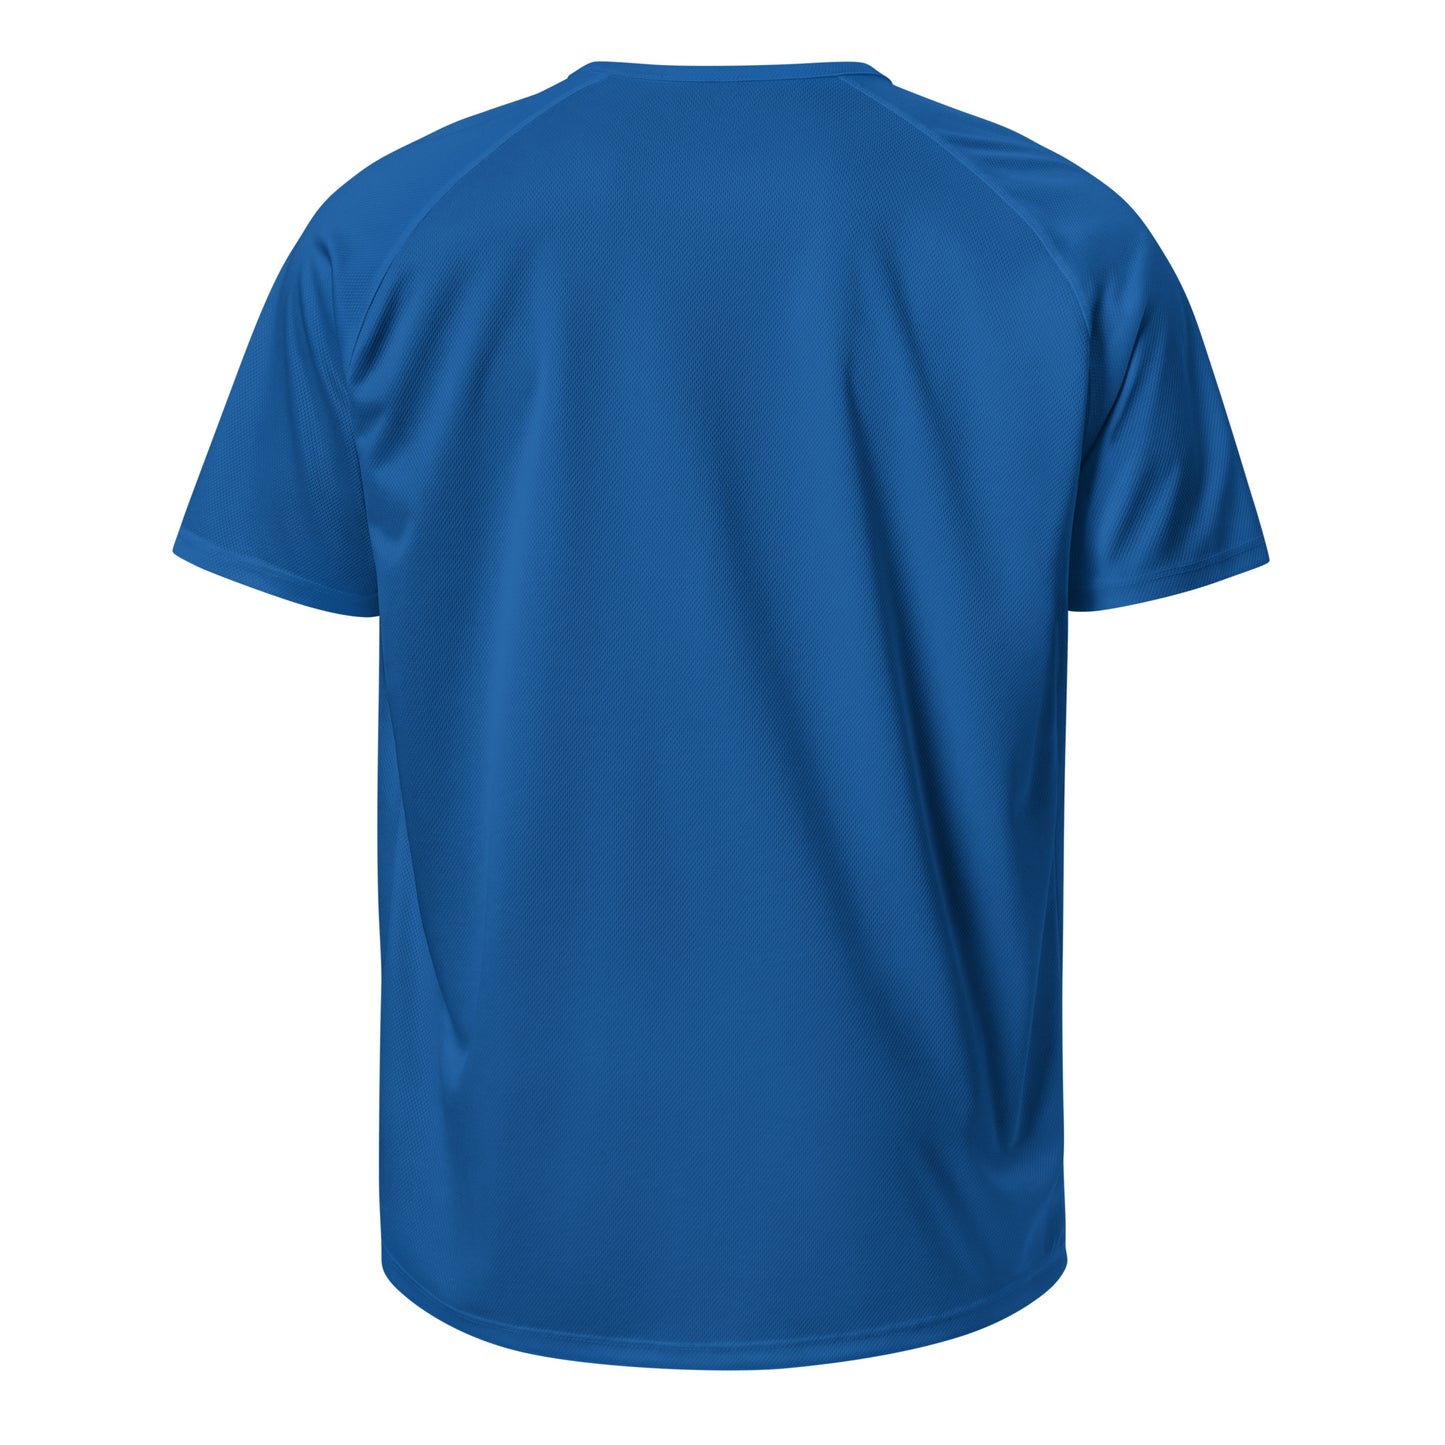 E143 - Sports/Breathable Fabric (MX win/woman : Blue)